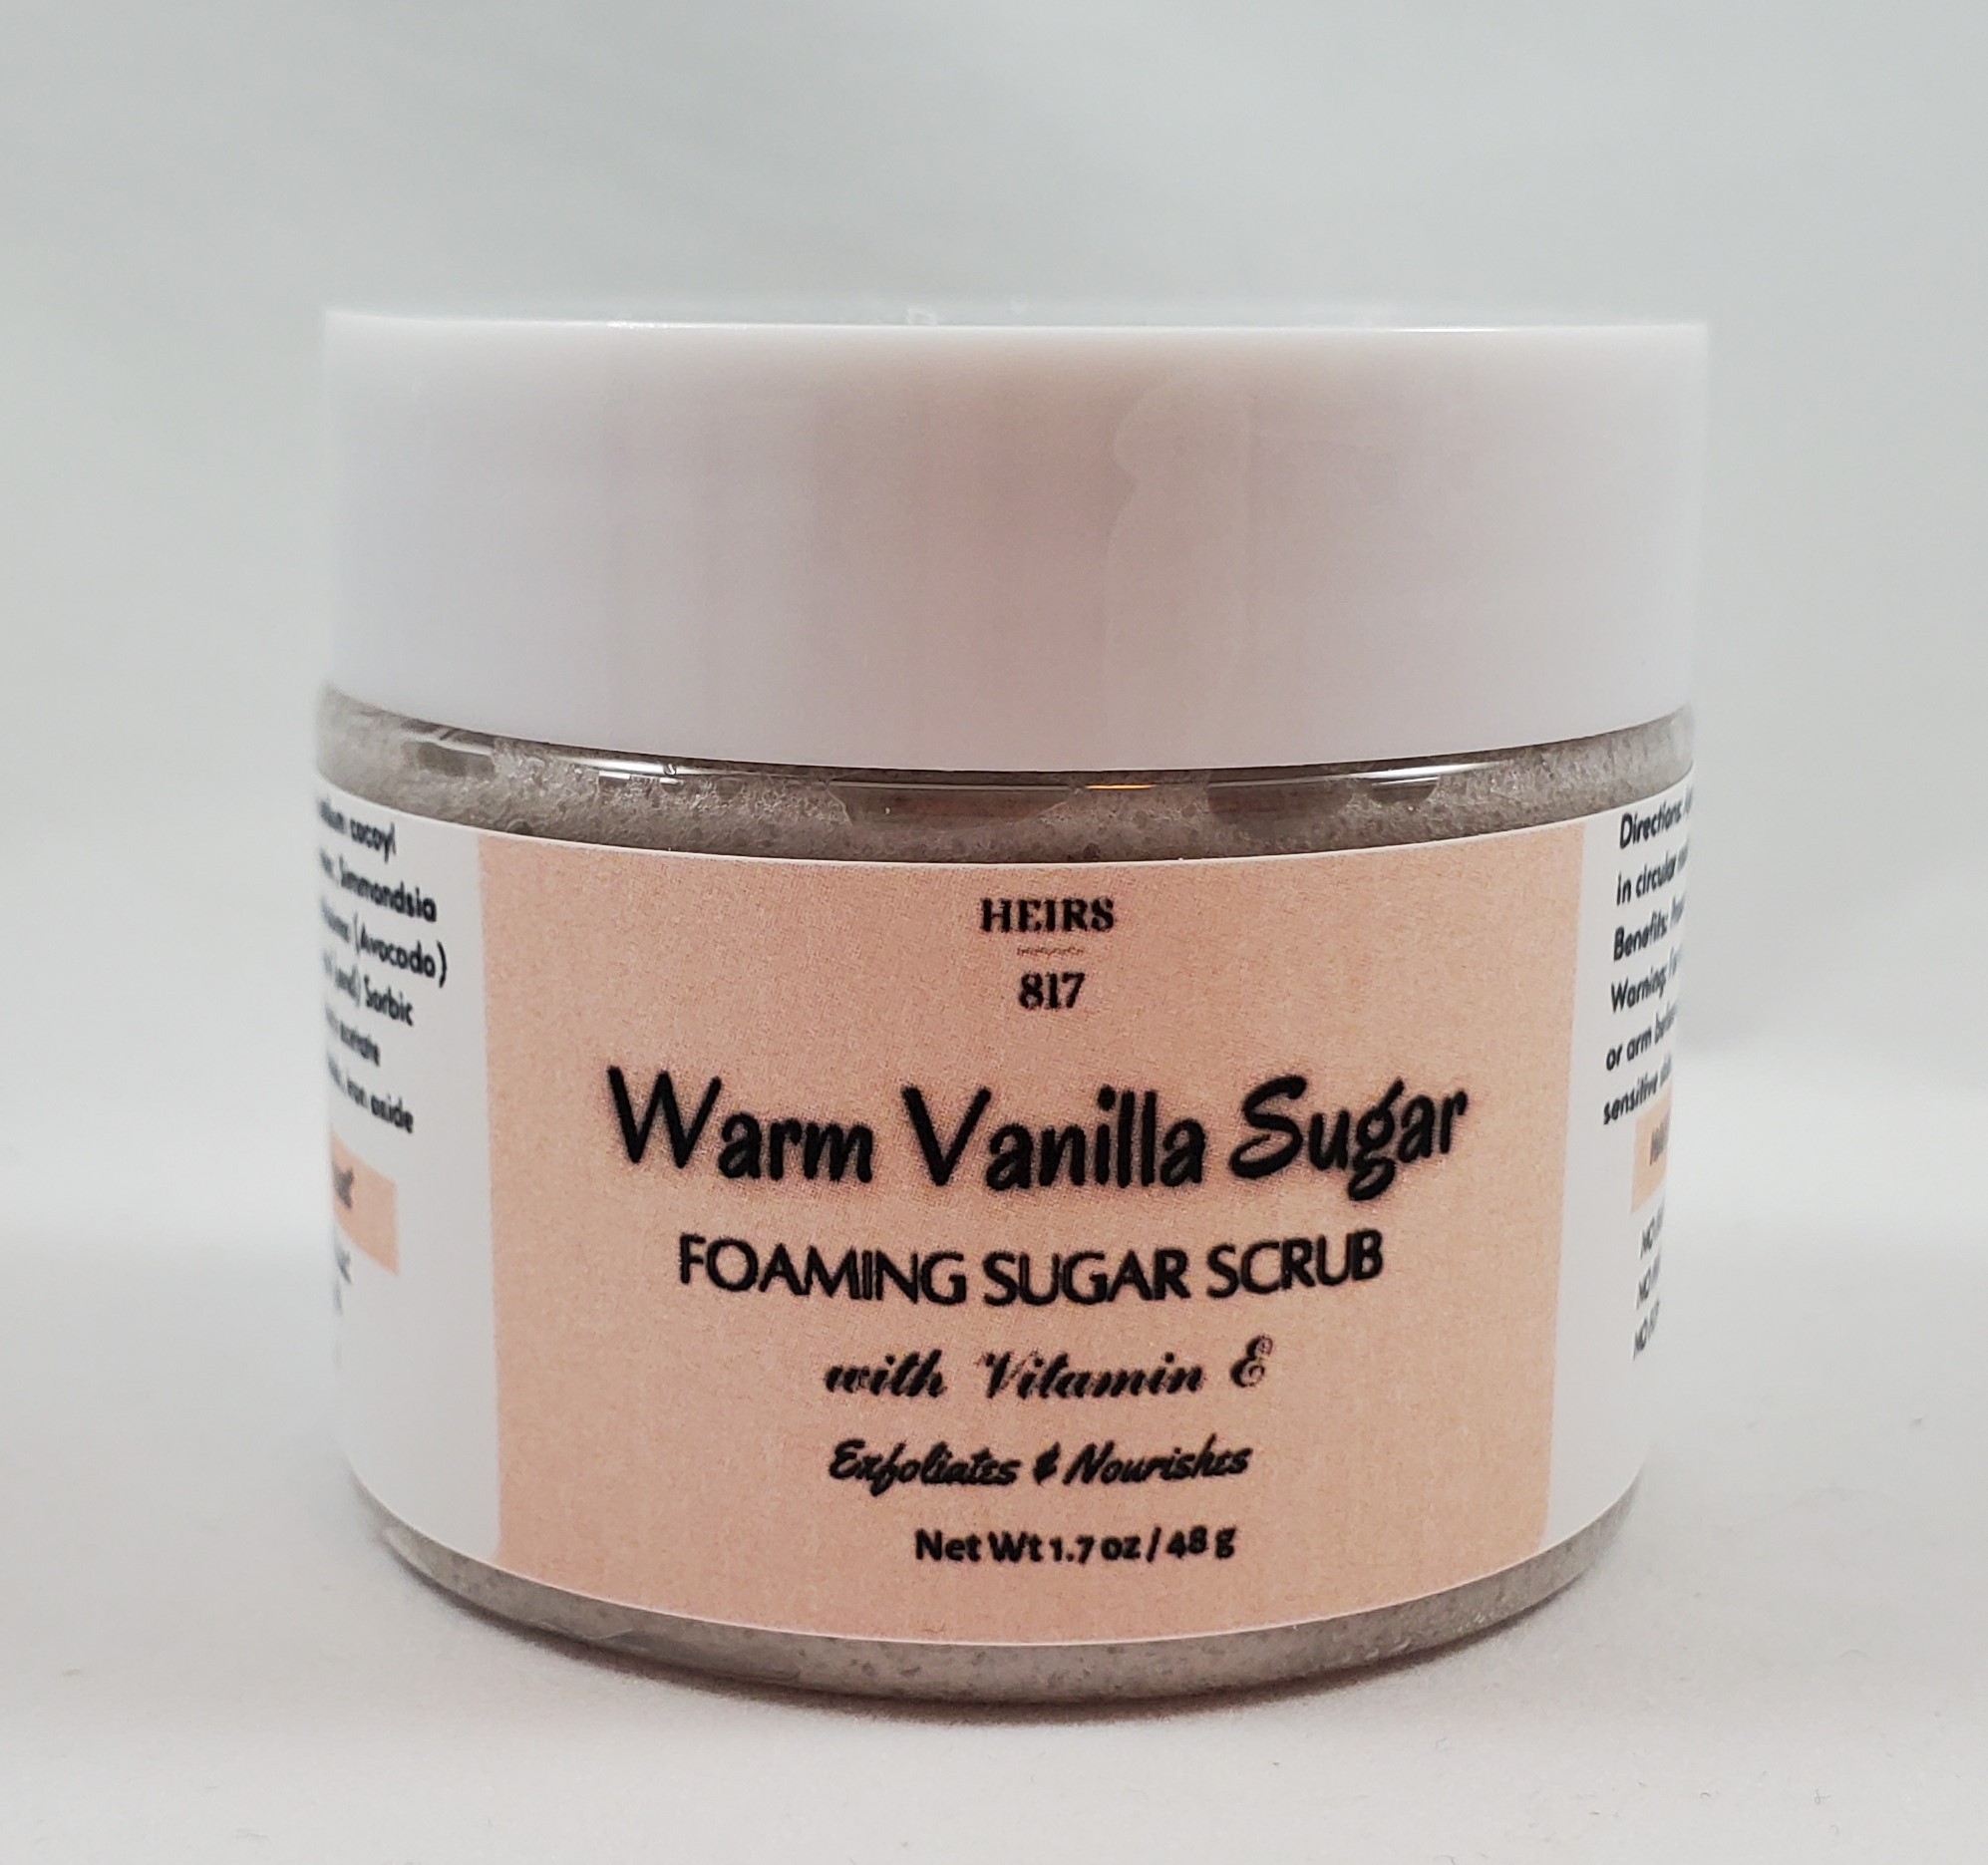 Warm Vanilla Sugar, Foaming Sugar Scrub, with Vitamin E TRAVEL SIZE -  HEIRS817